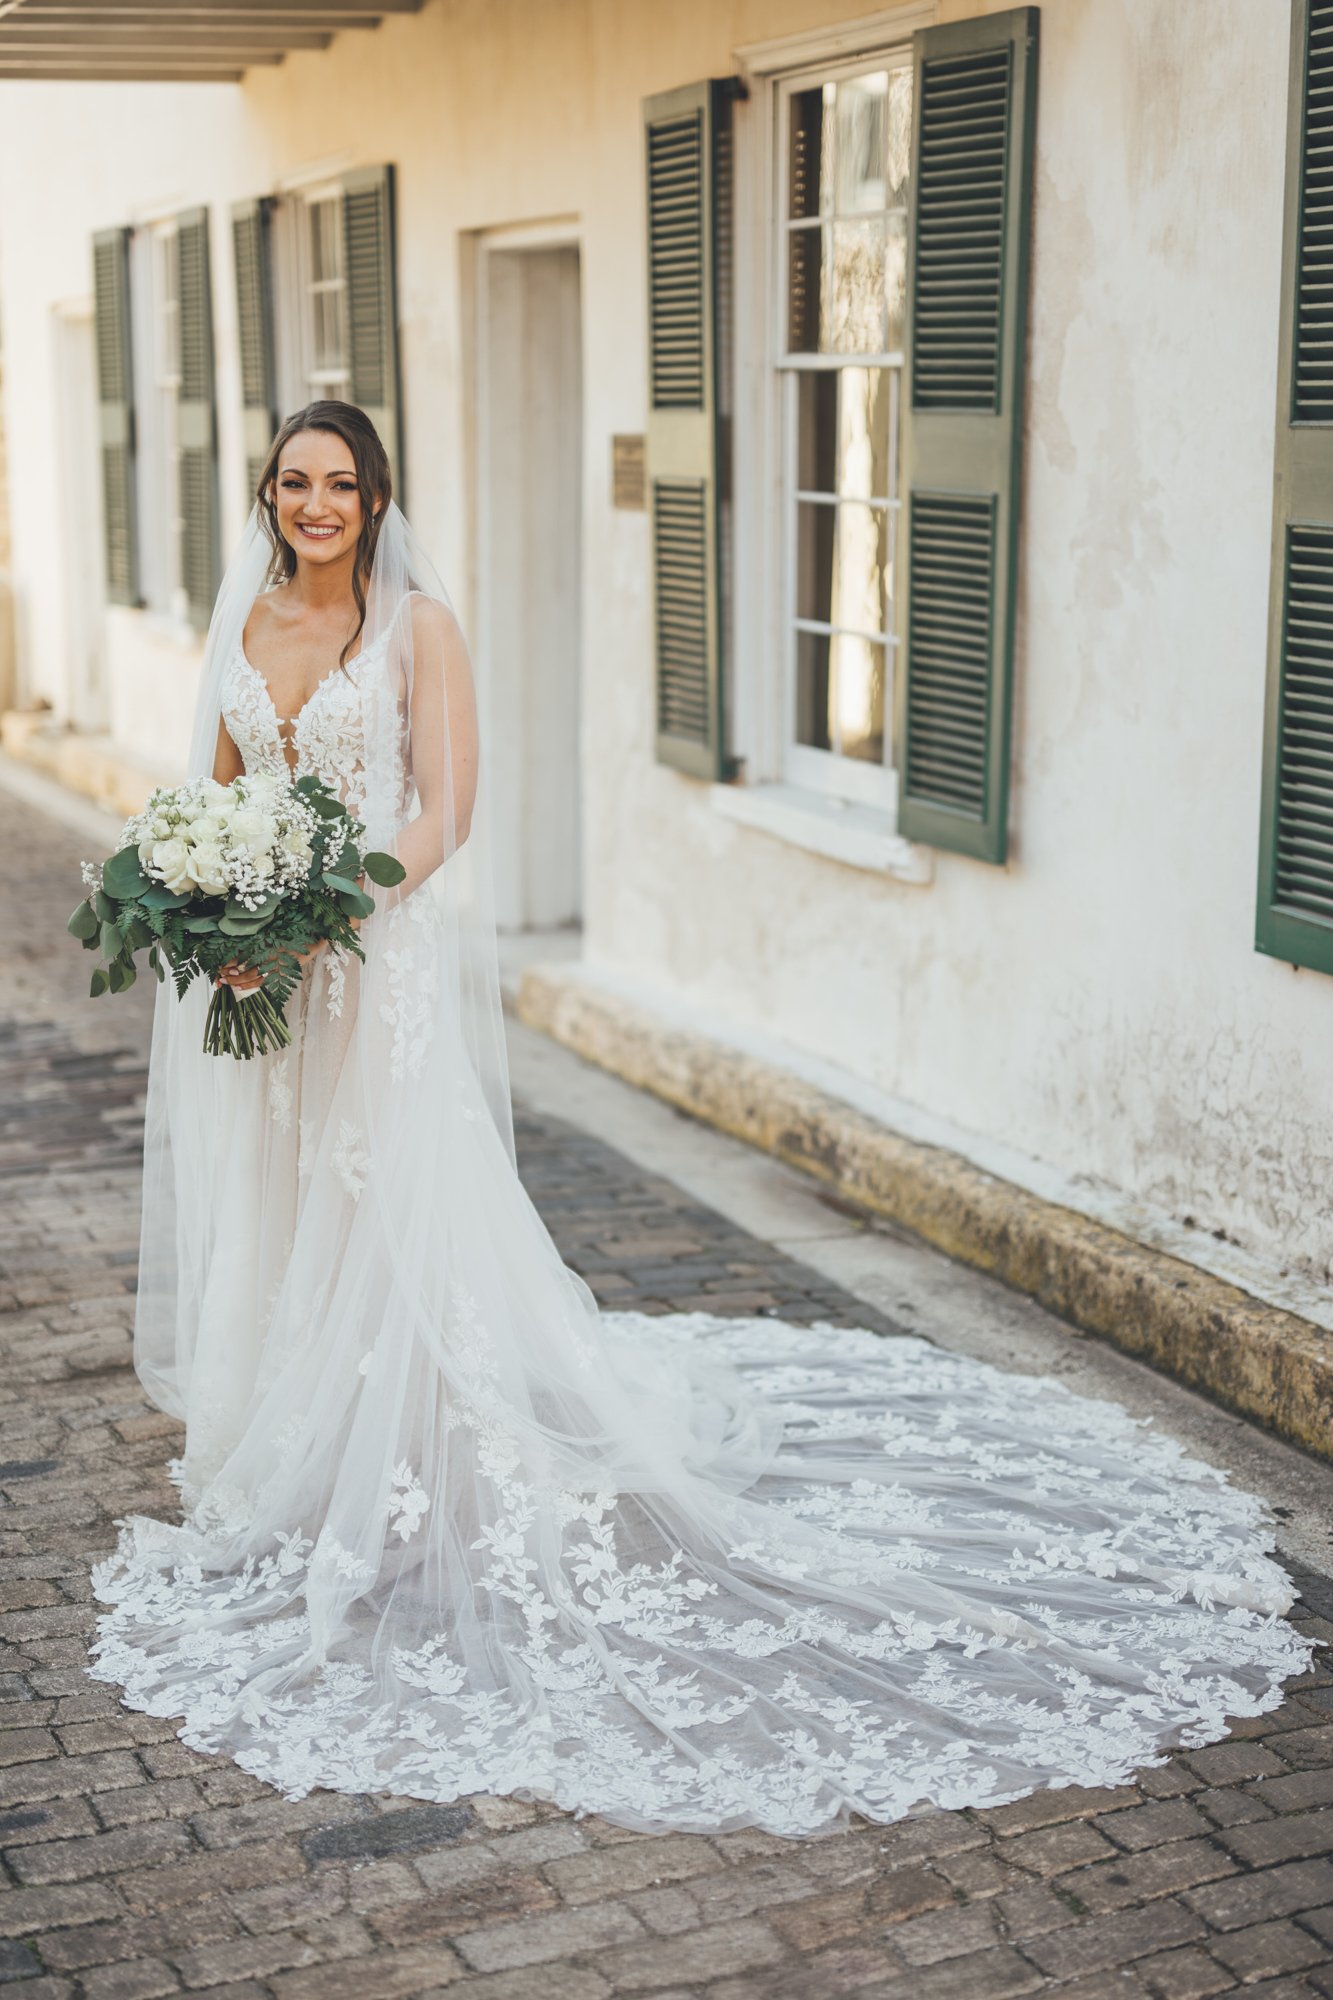 Bow Tie Photo & Video bride in her wedding dress in St. Augustine, Florida's historic alley.jpg